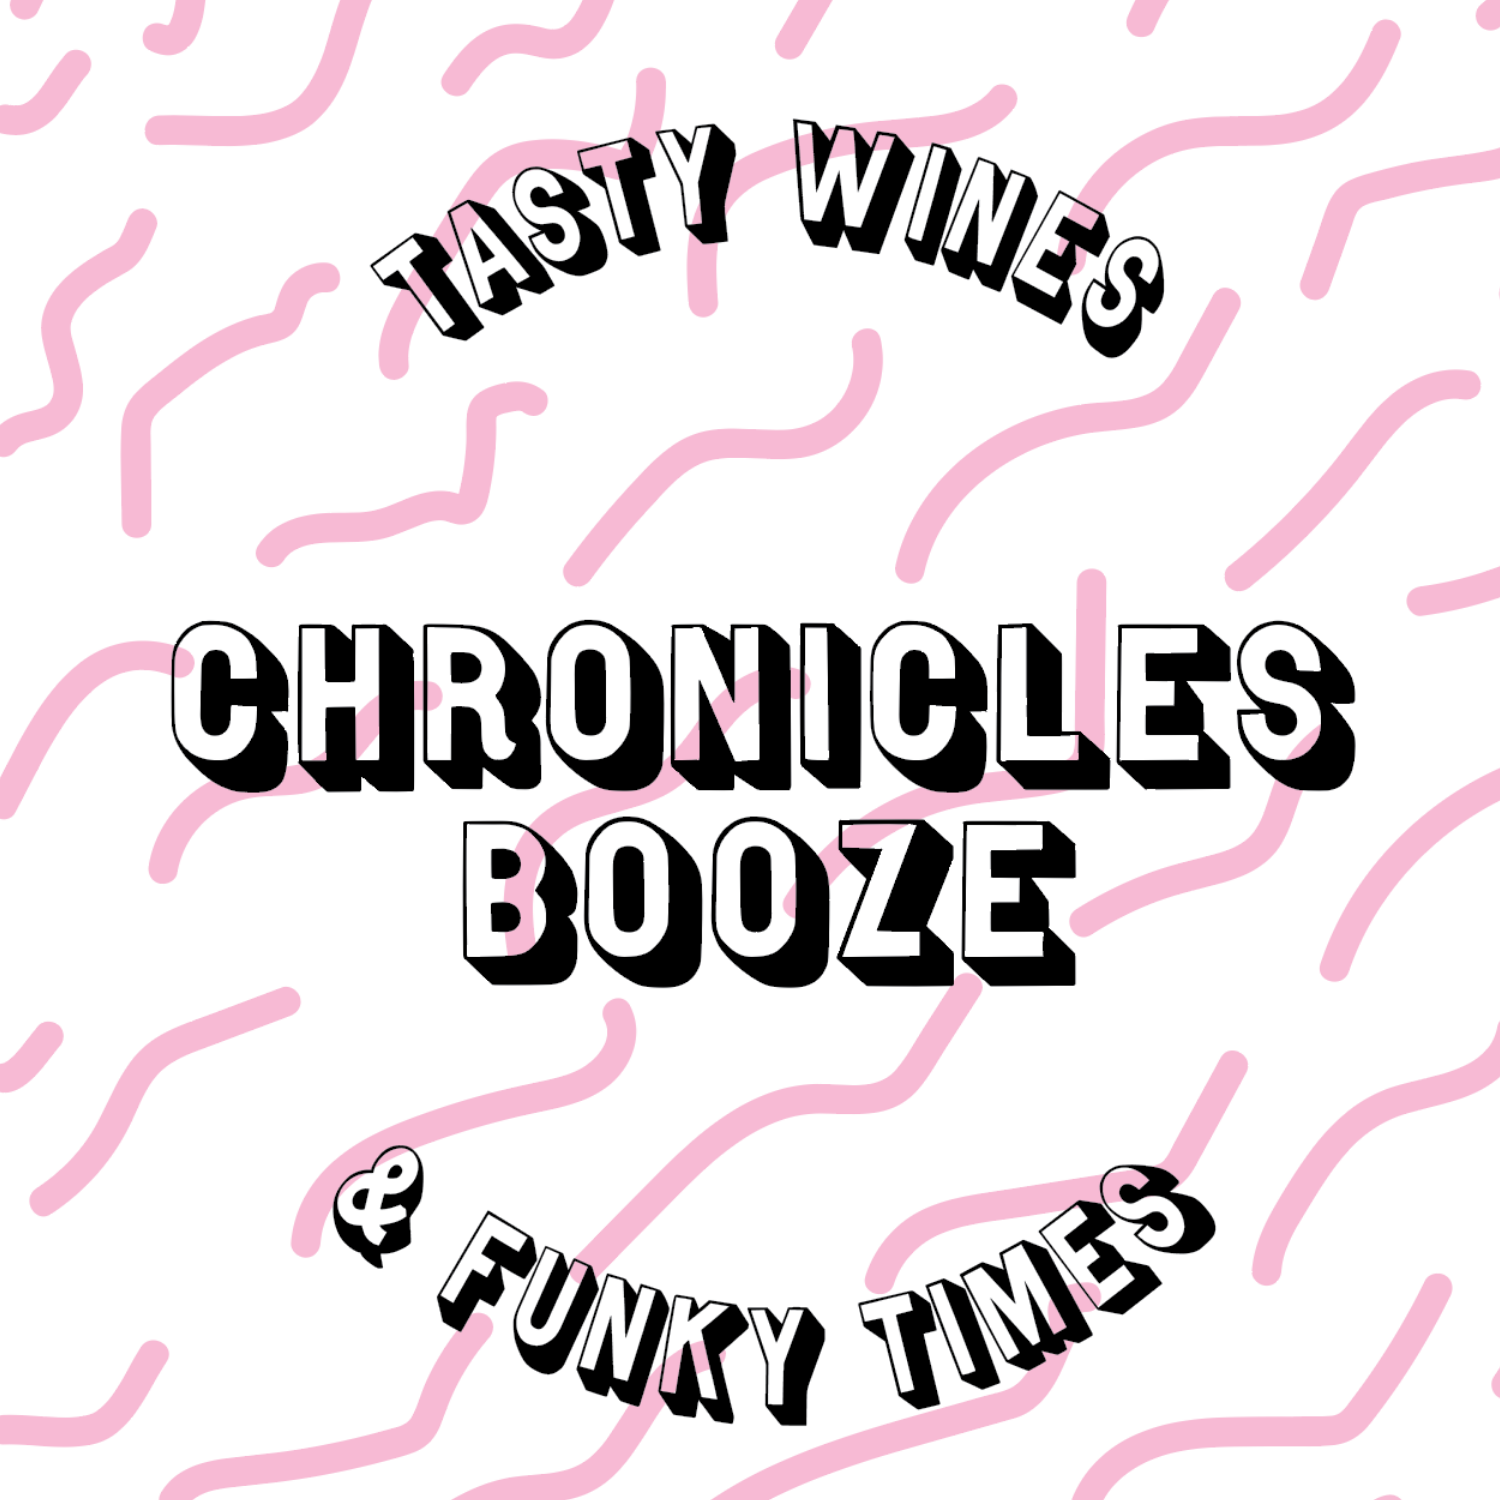 Chronicles Booze